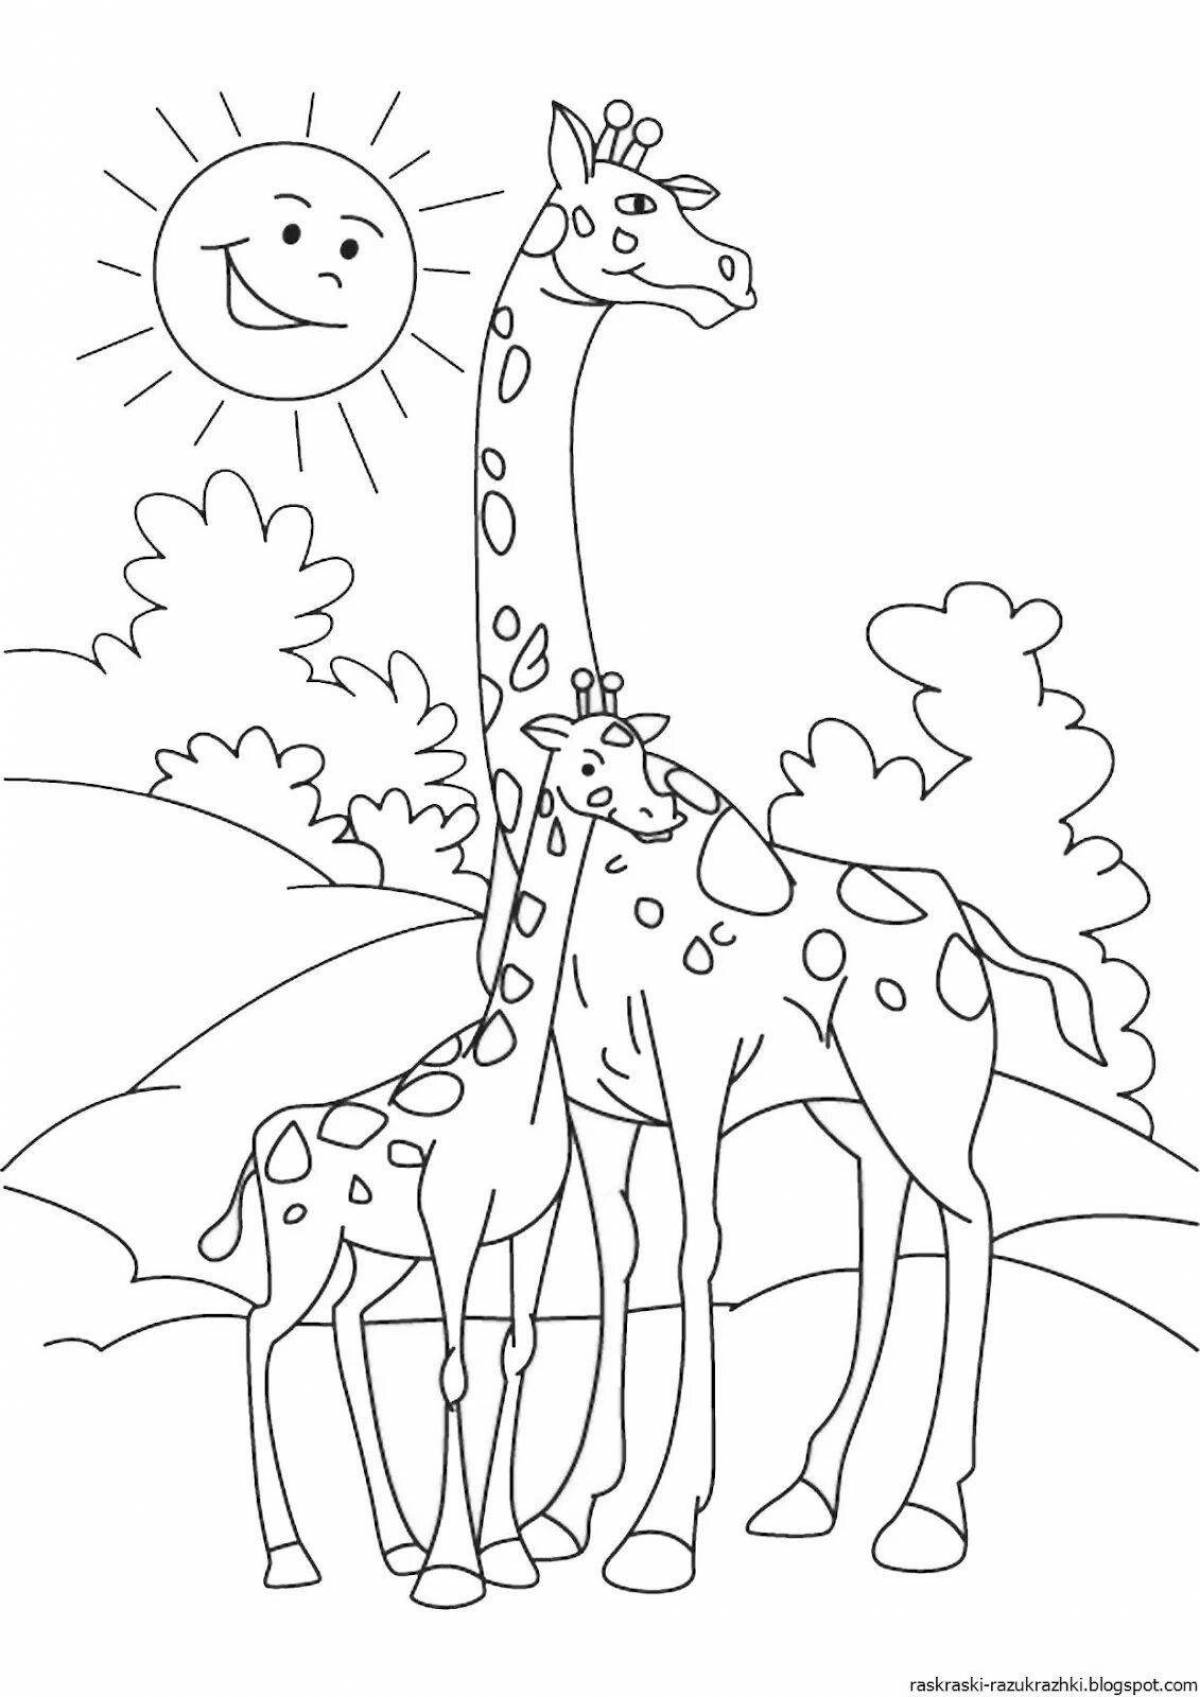 Cheerful coloring of a giraffe